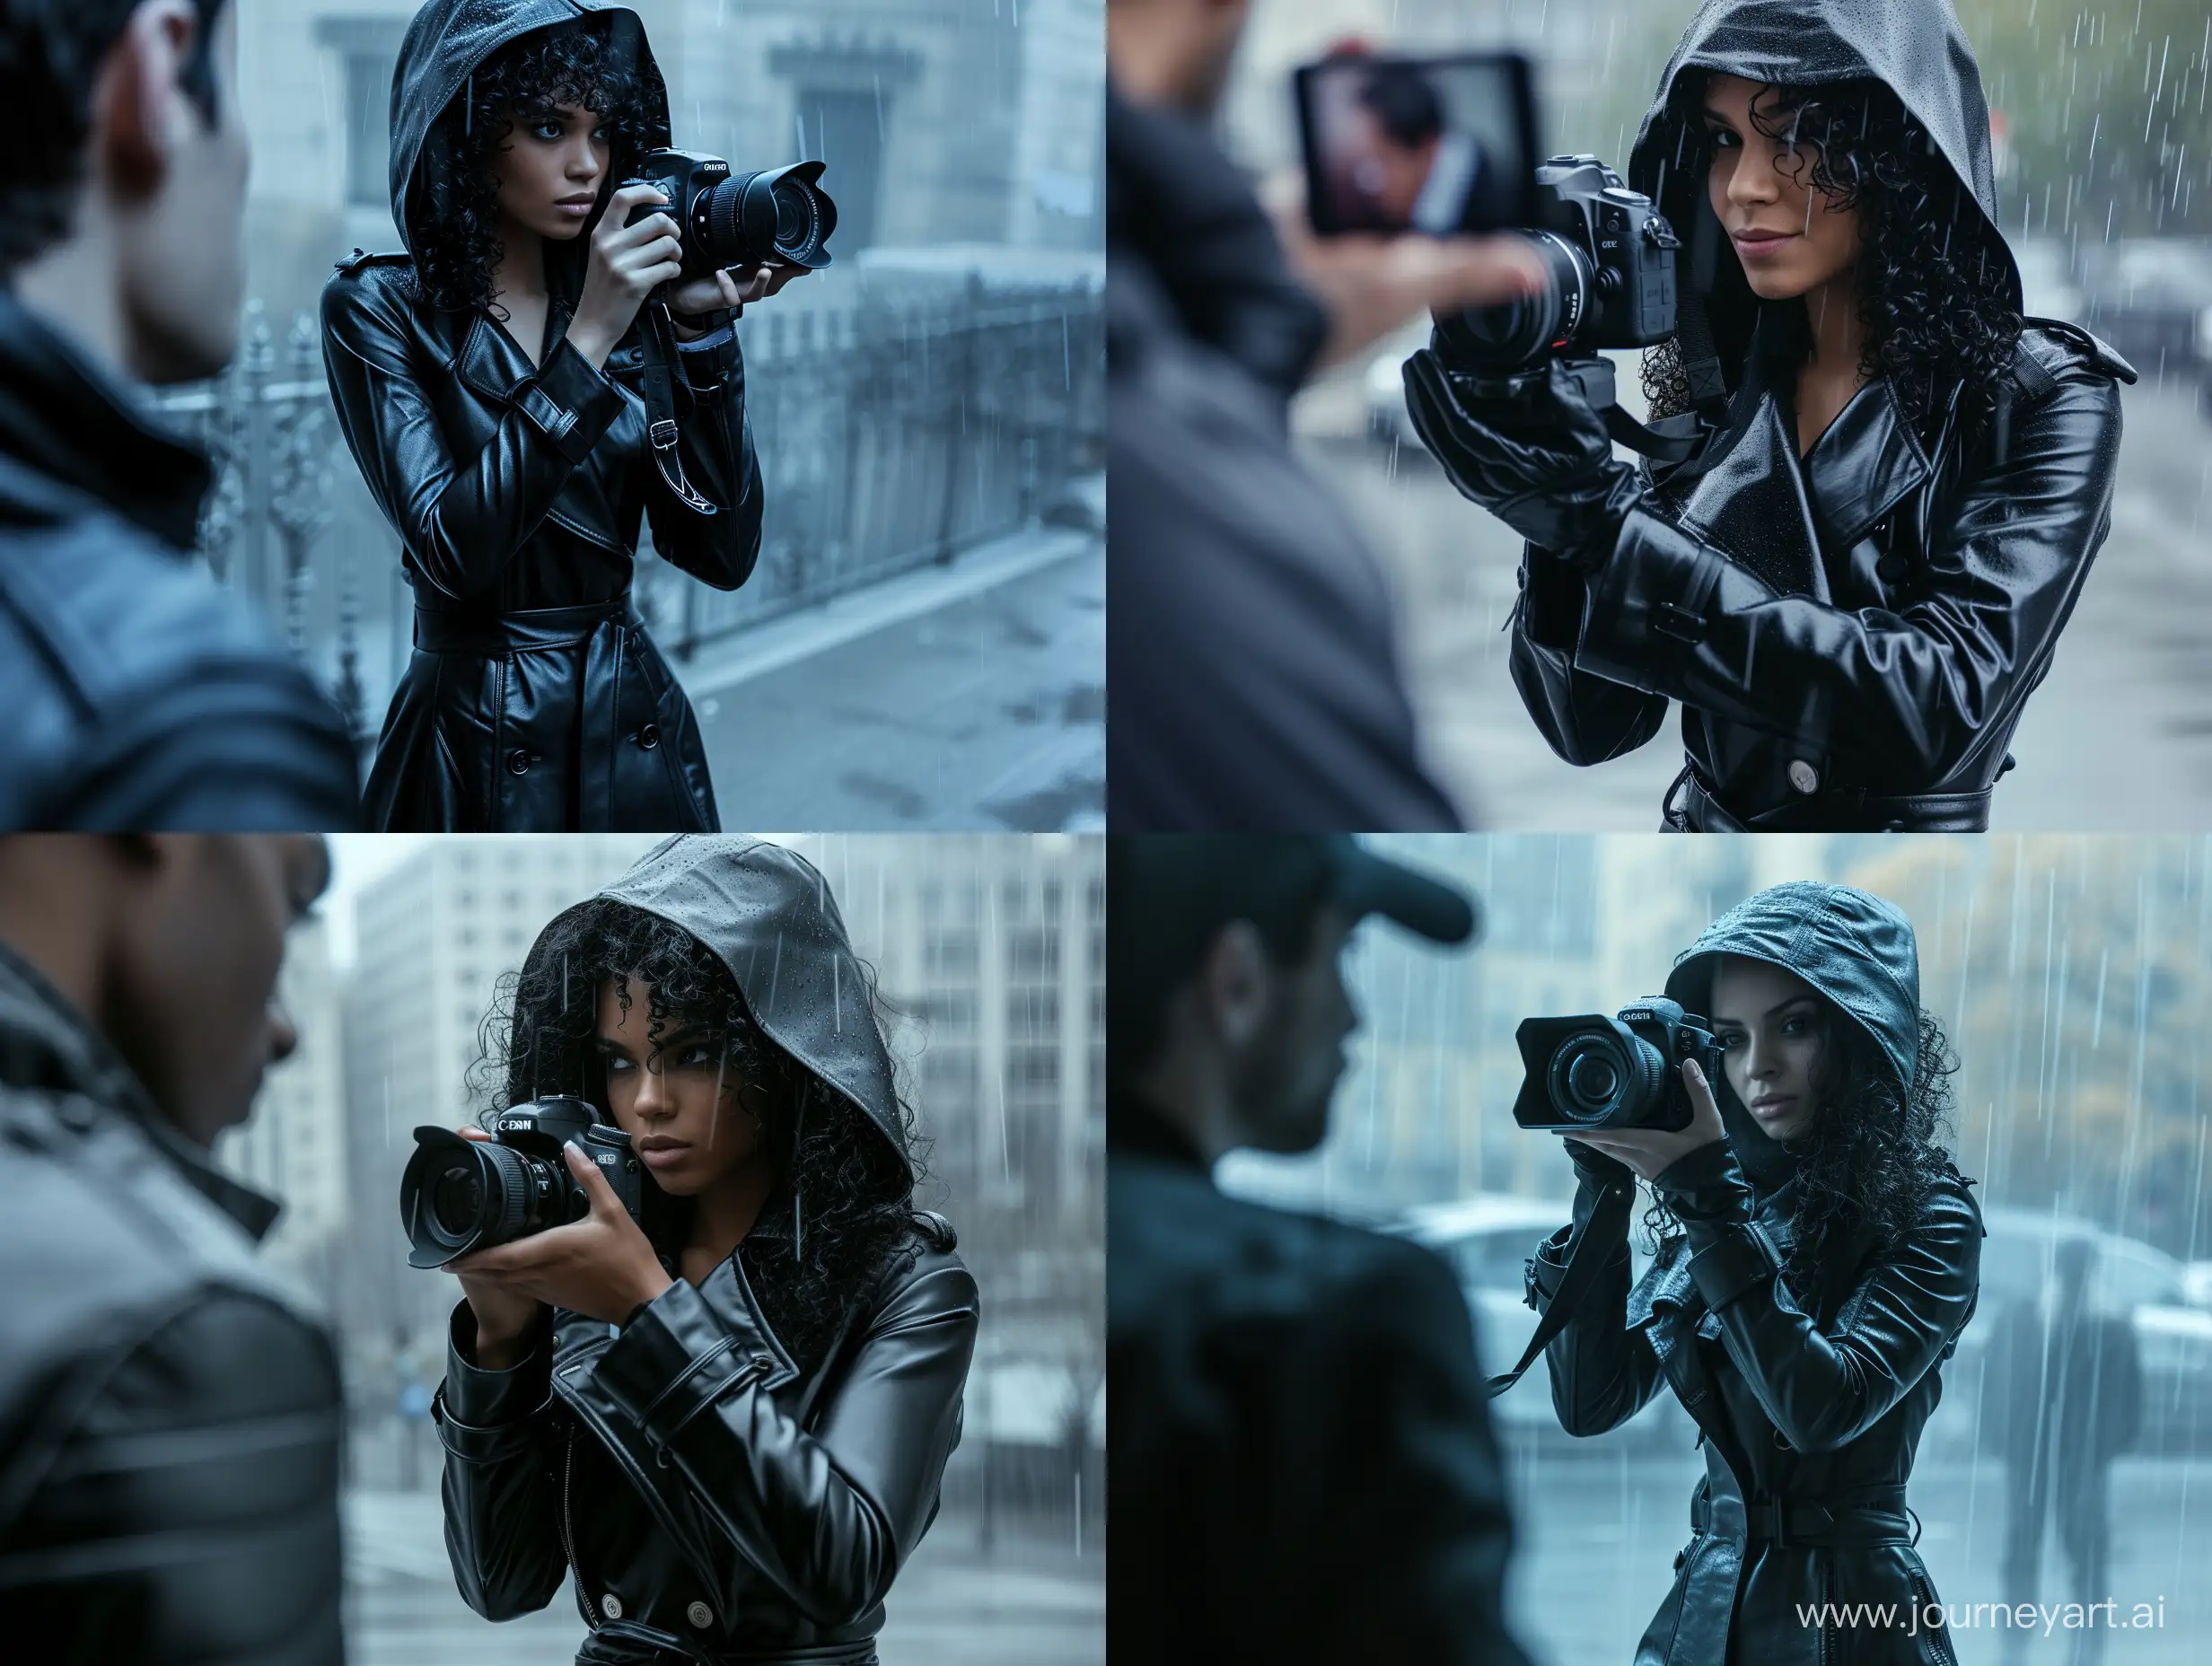 Sleek-Detective-Captures-Suspicious-Scene-in-City-Rain